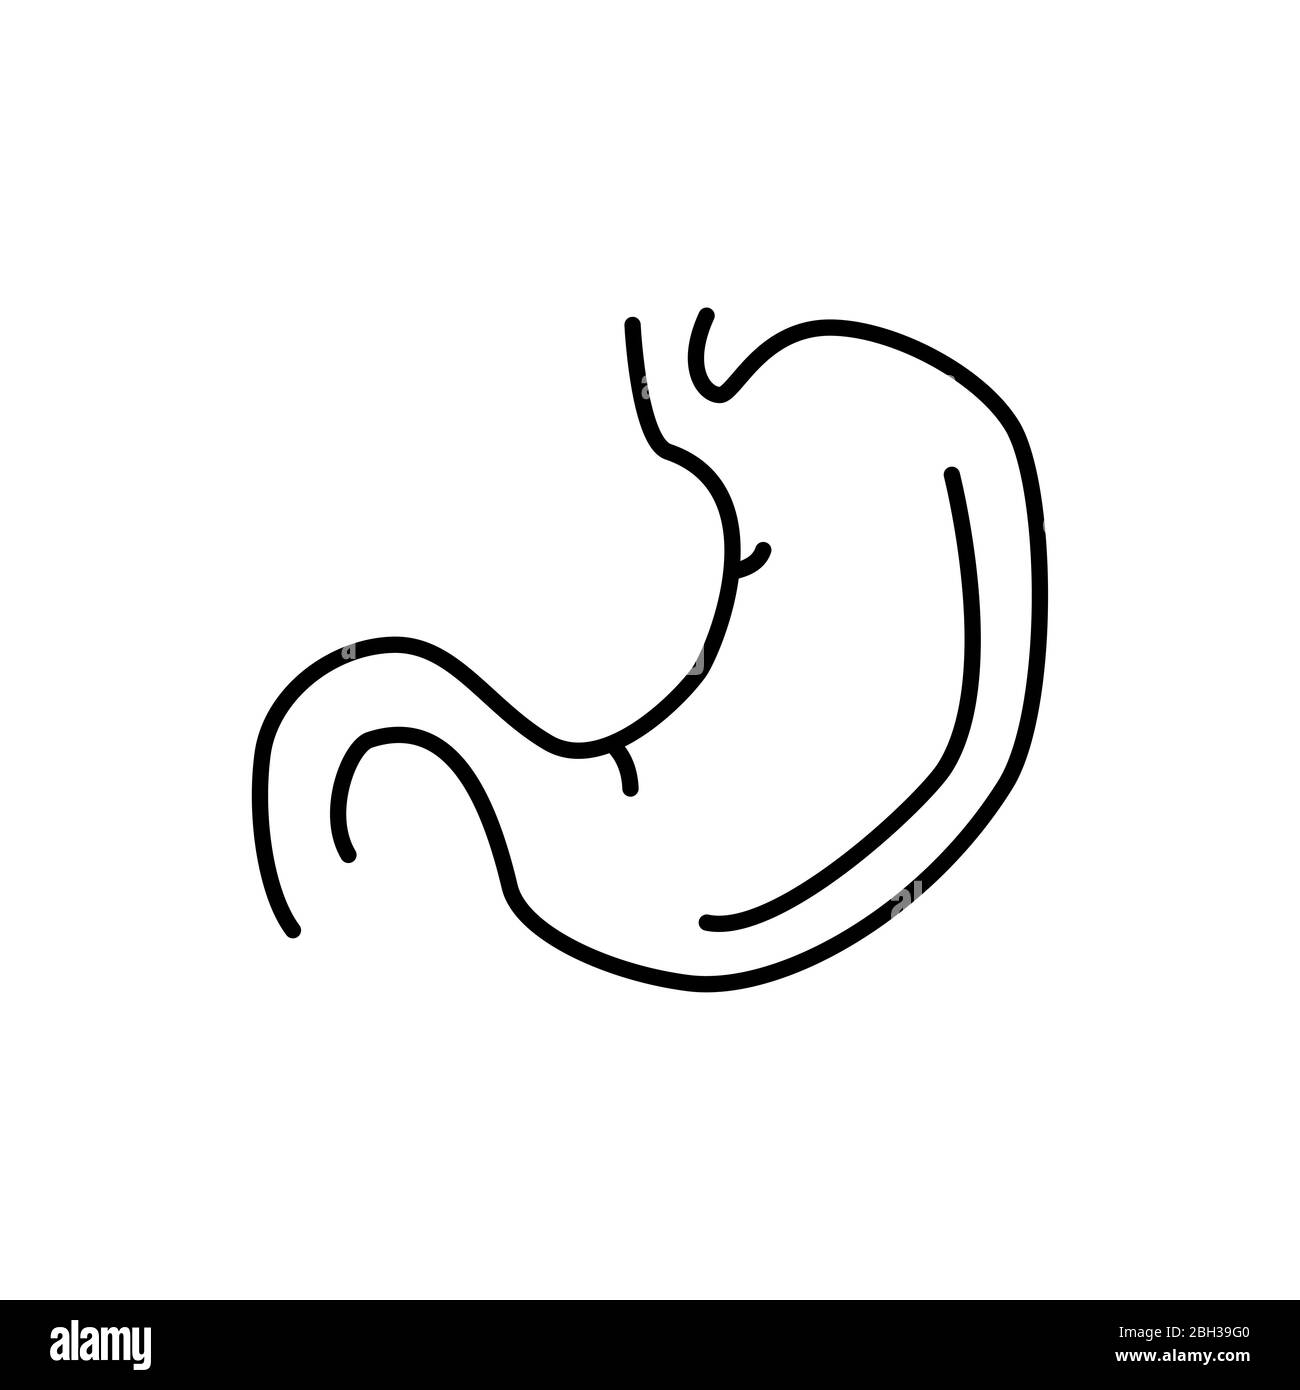 Human stomach sign. Simple line vector icon. Internal human organ. Stock Photo